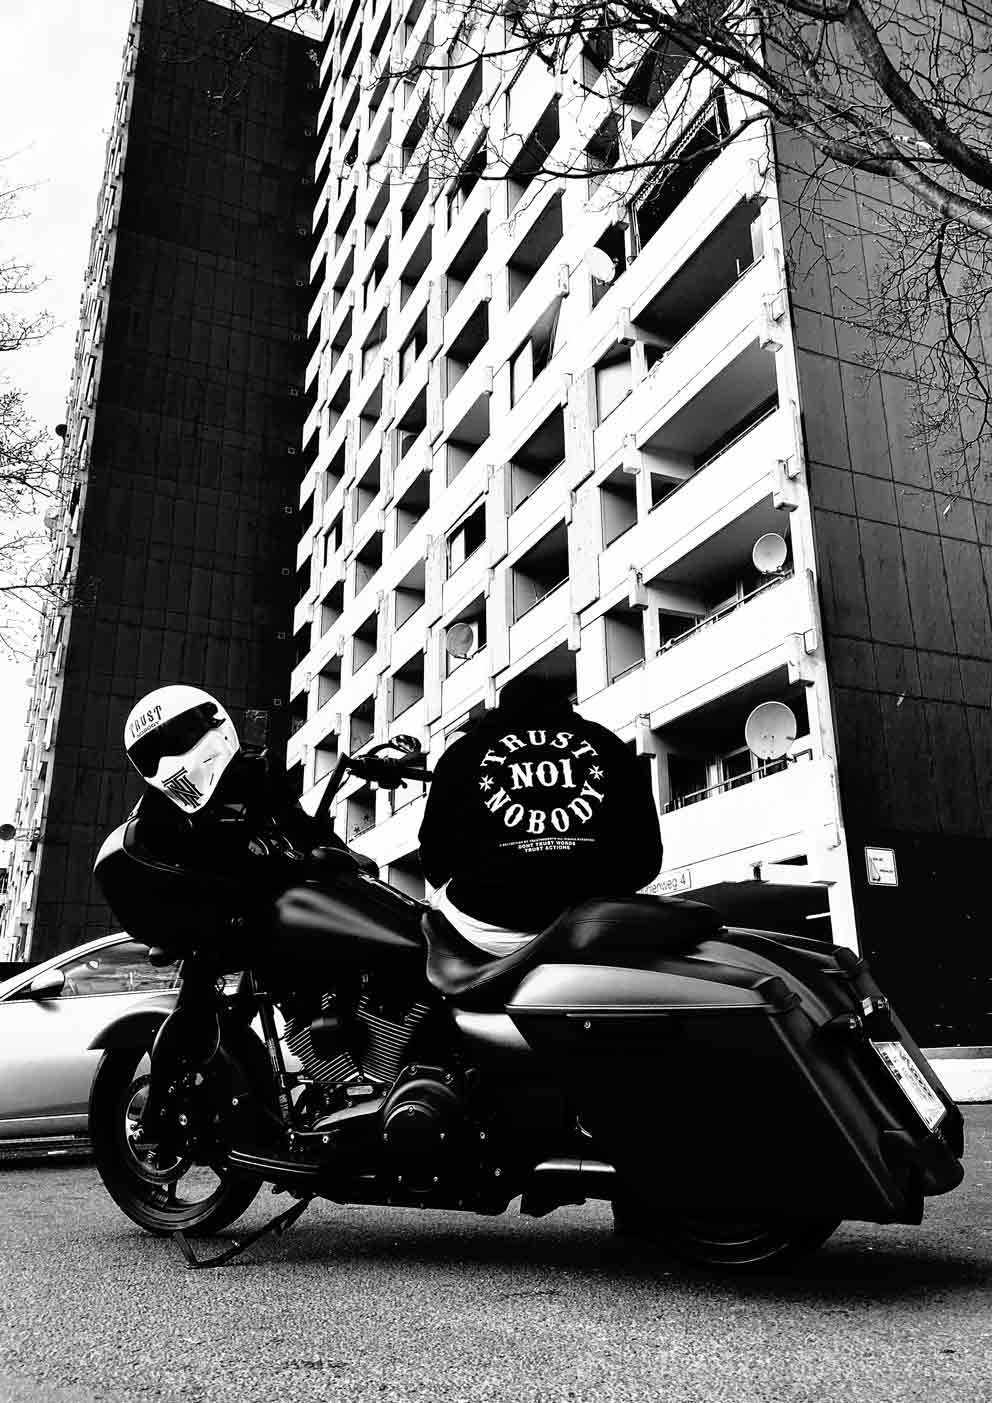 TRUSTNOBODY®  |  Rocker Bike Life Clothing  Brand